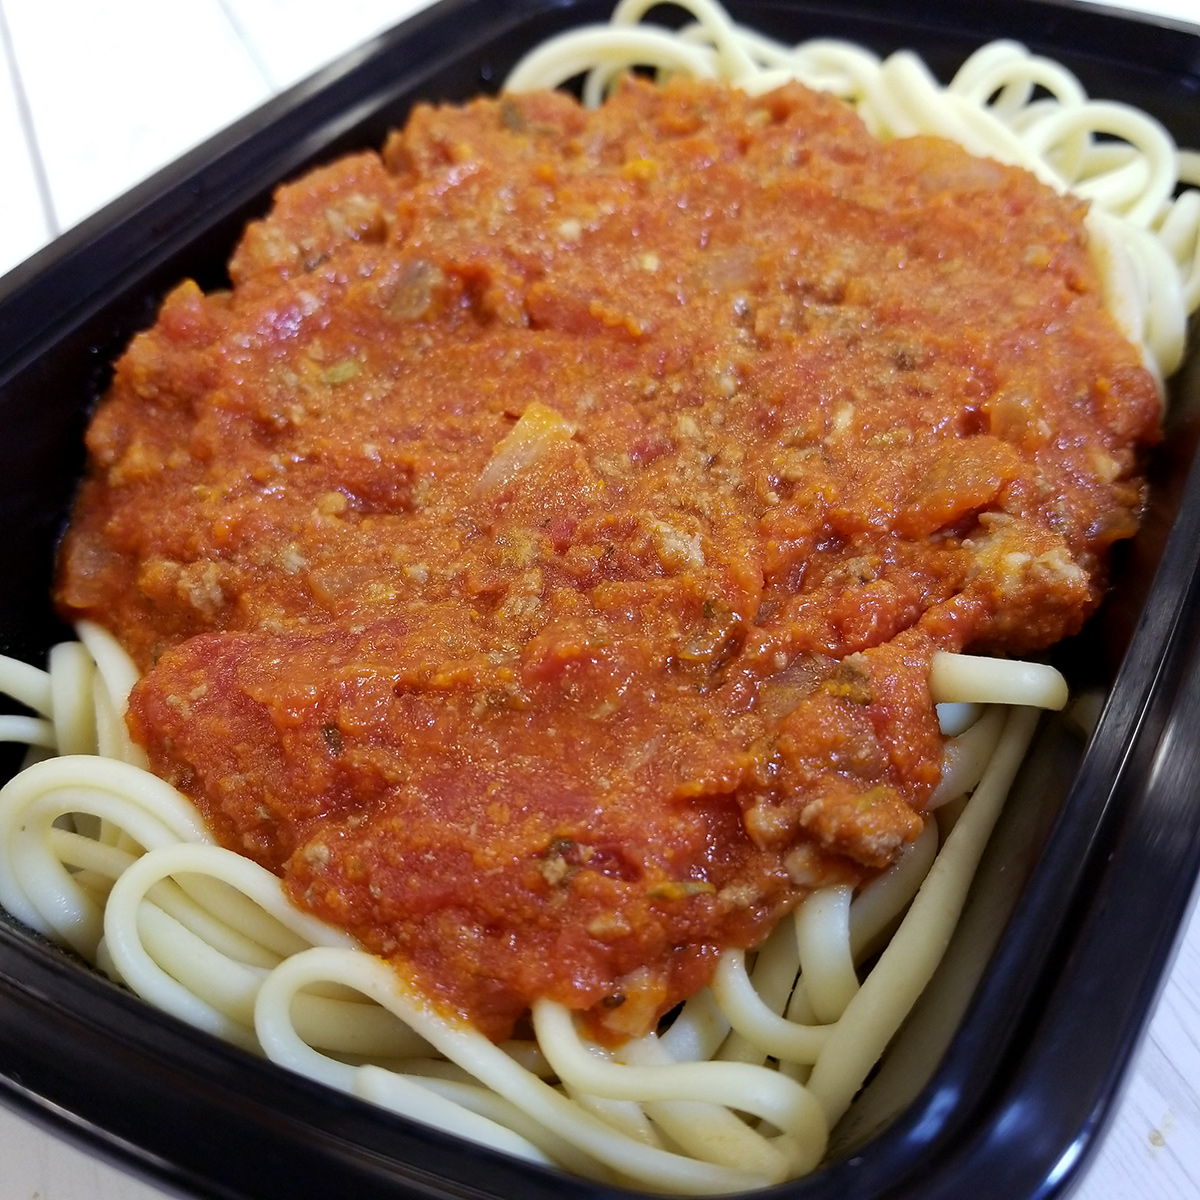 spaghetti 02